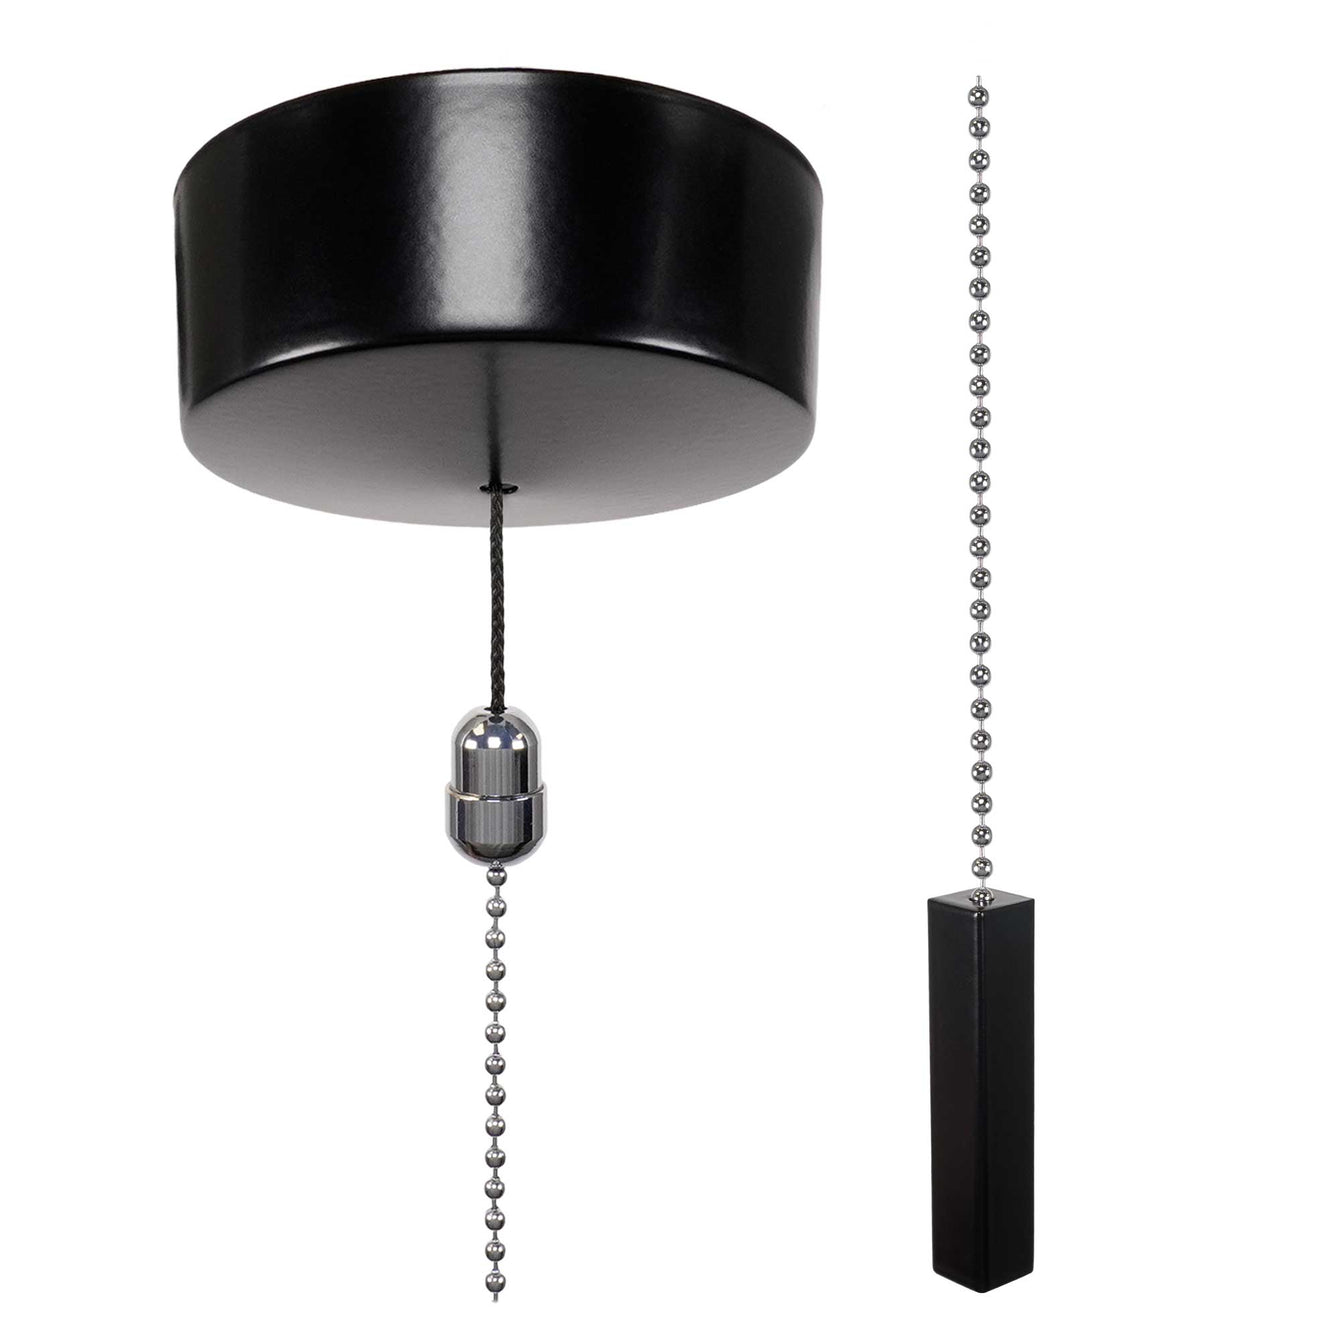 ElekTek Premium Black Bathroom Light Pull Cord Switch Kit with Pull Chain Handle Black Square Bar / Cord